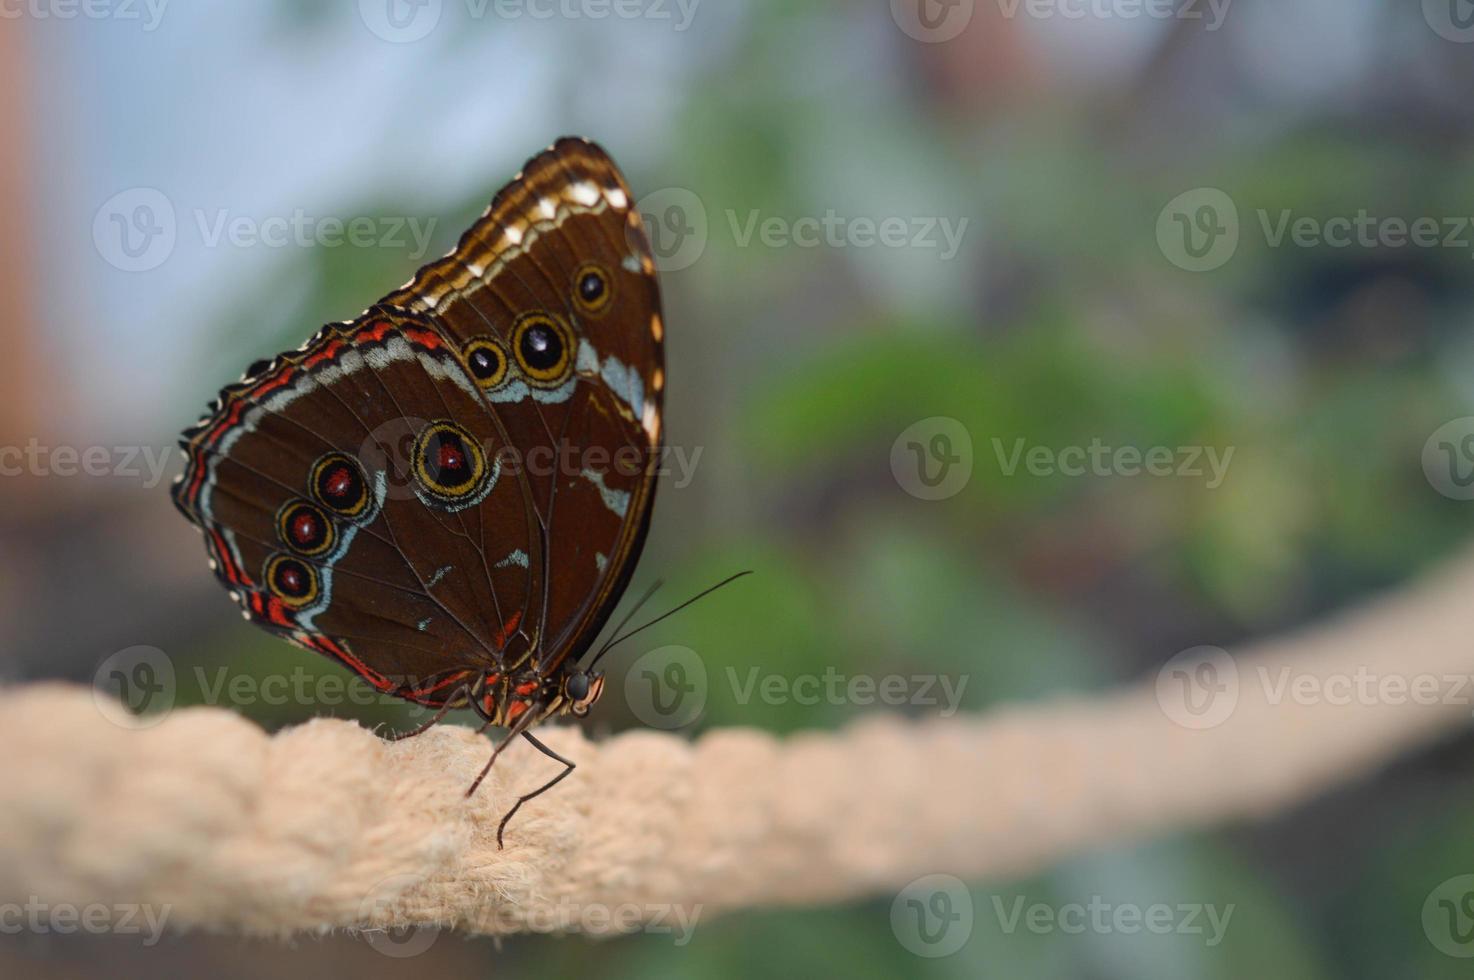 morpho peleides mariposa tropical grande y colorida foto